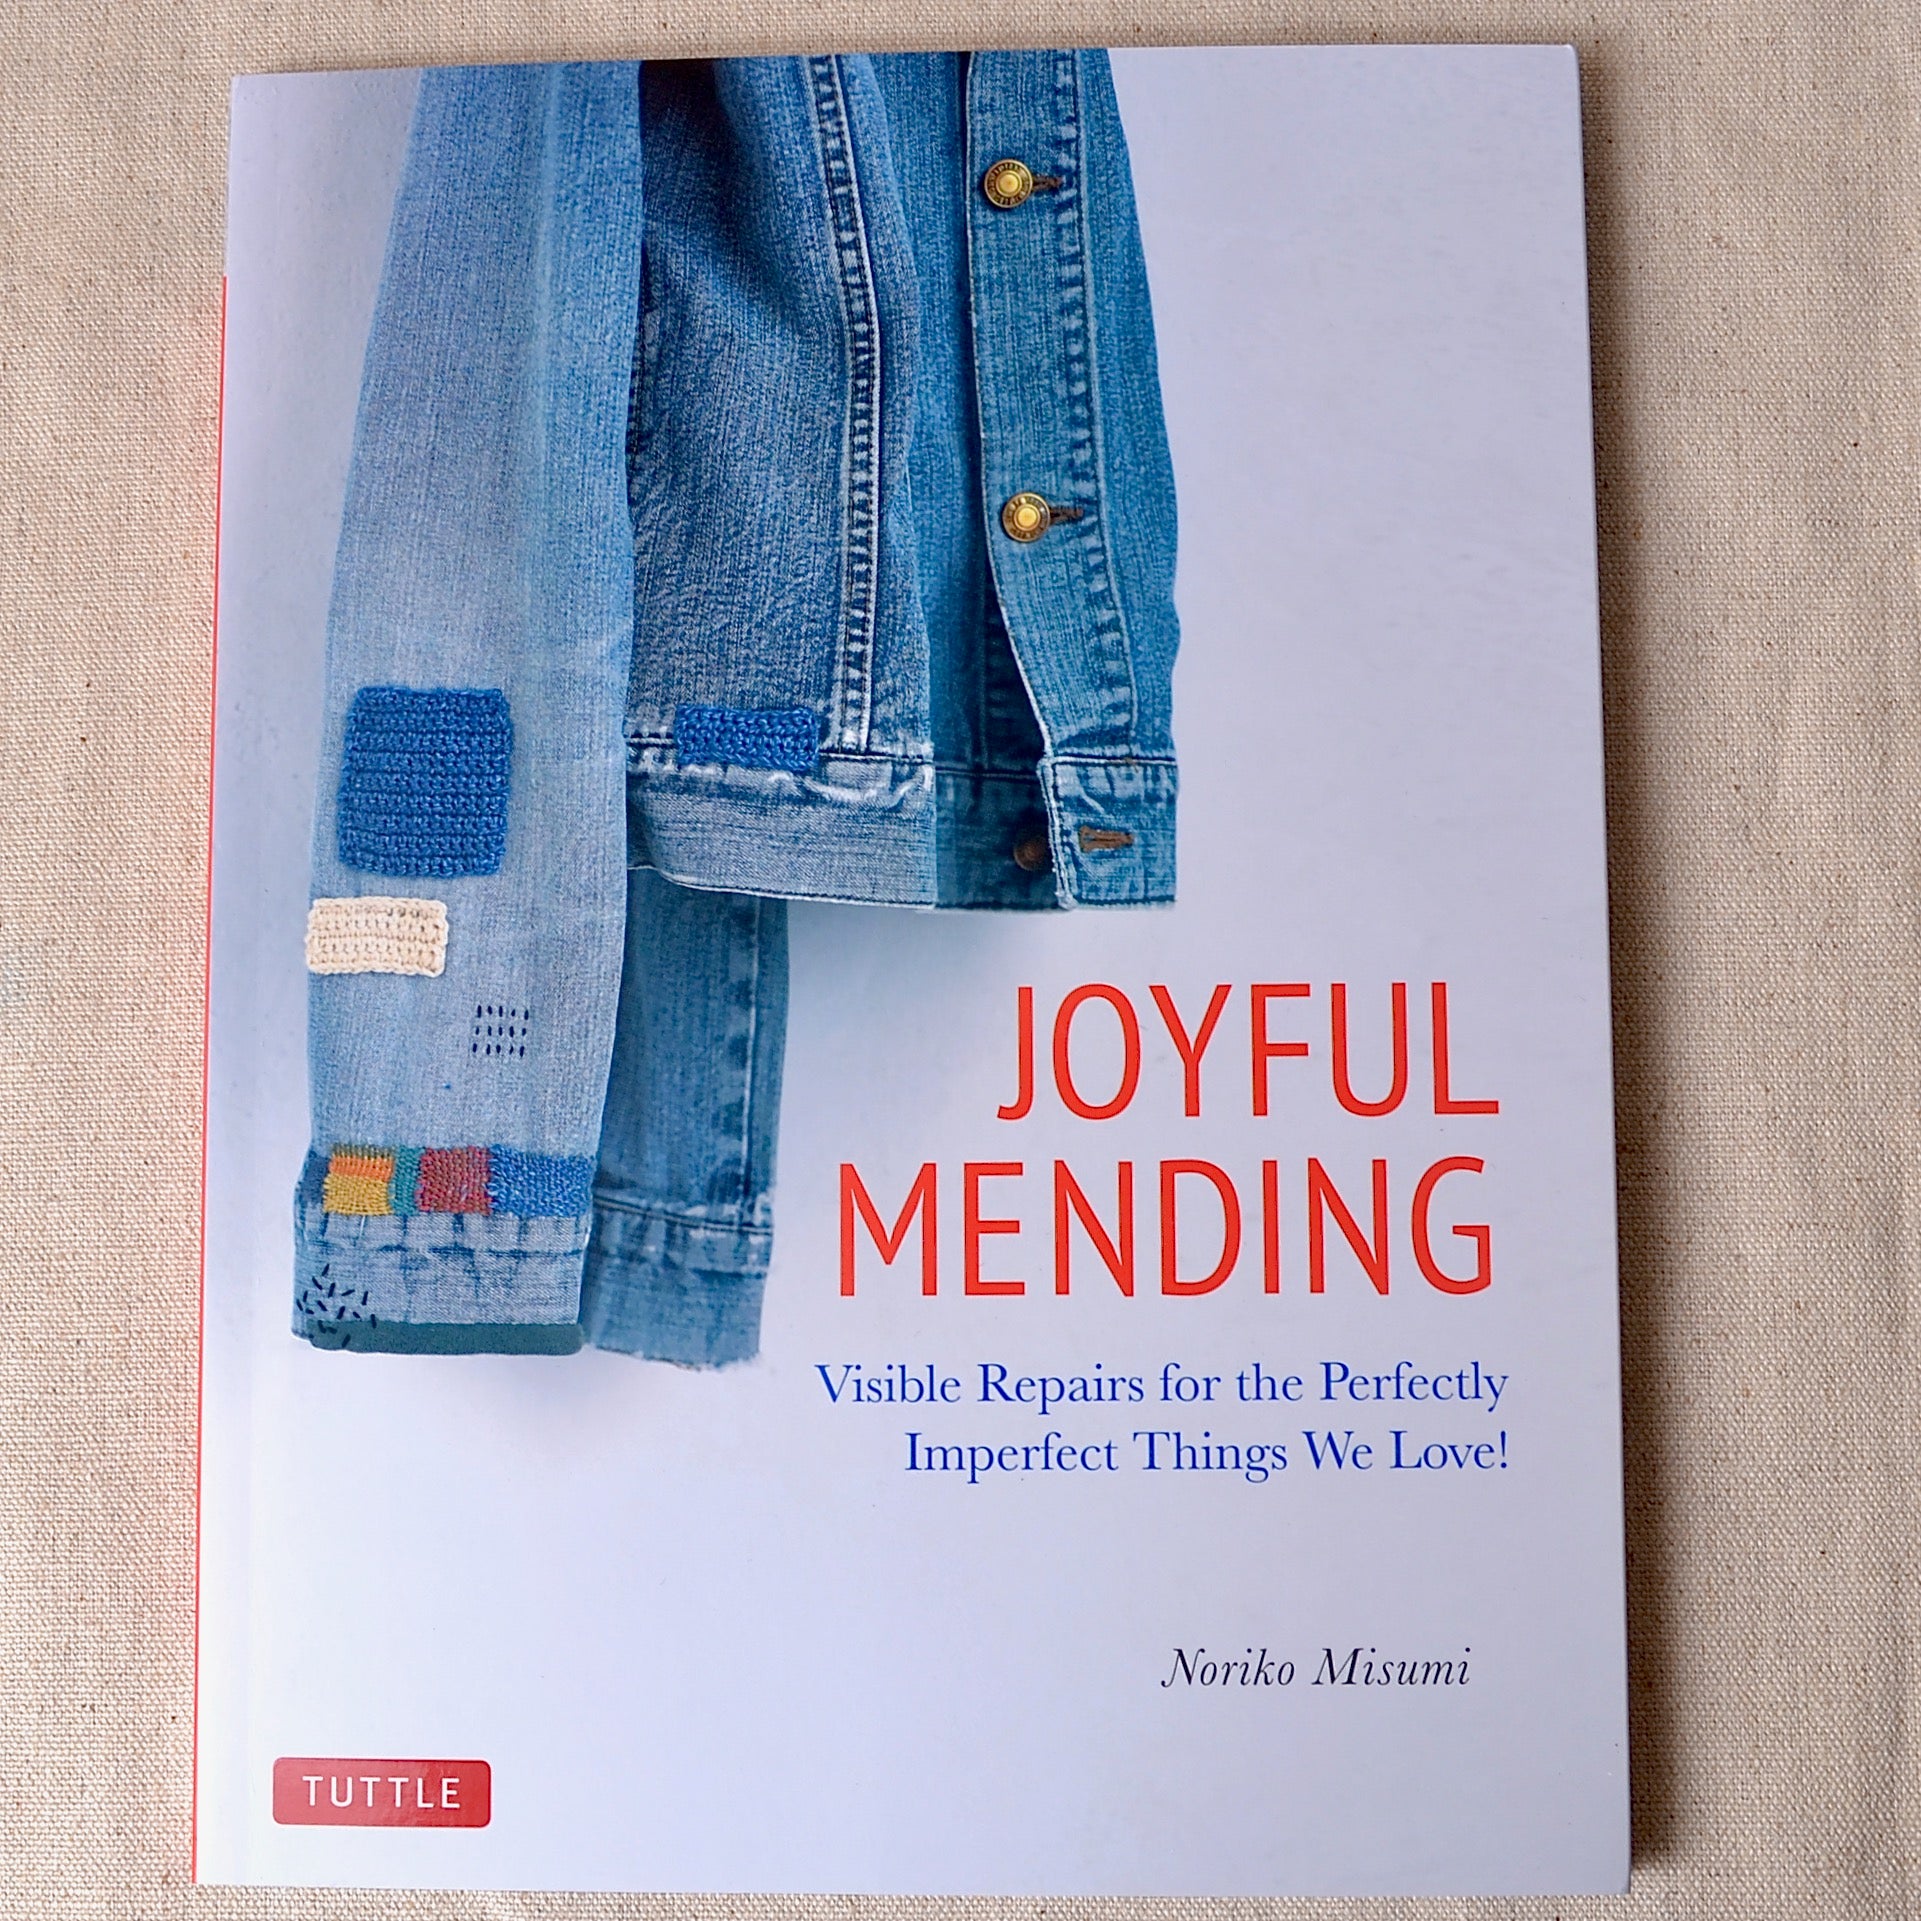 Joyful Mending book by Noriko Misumi